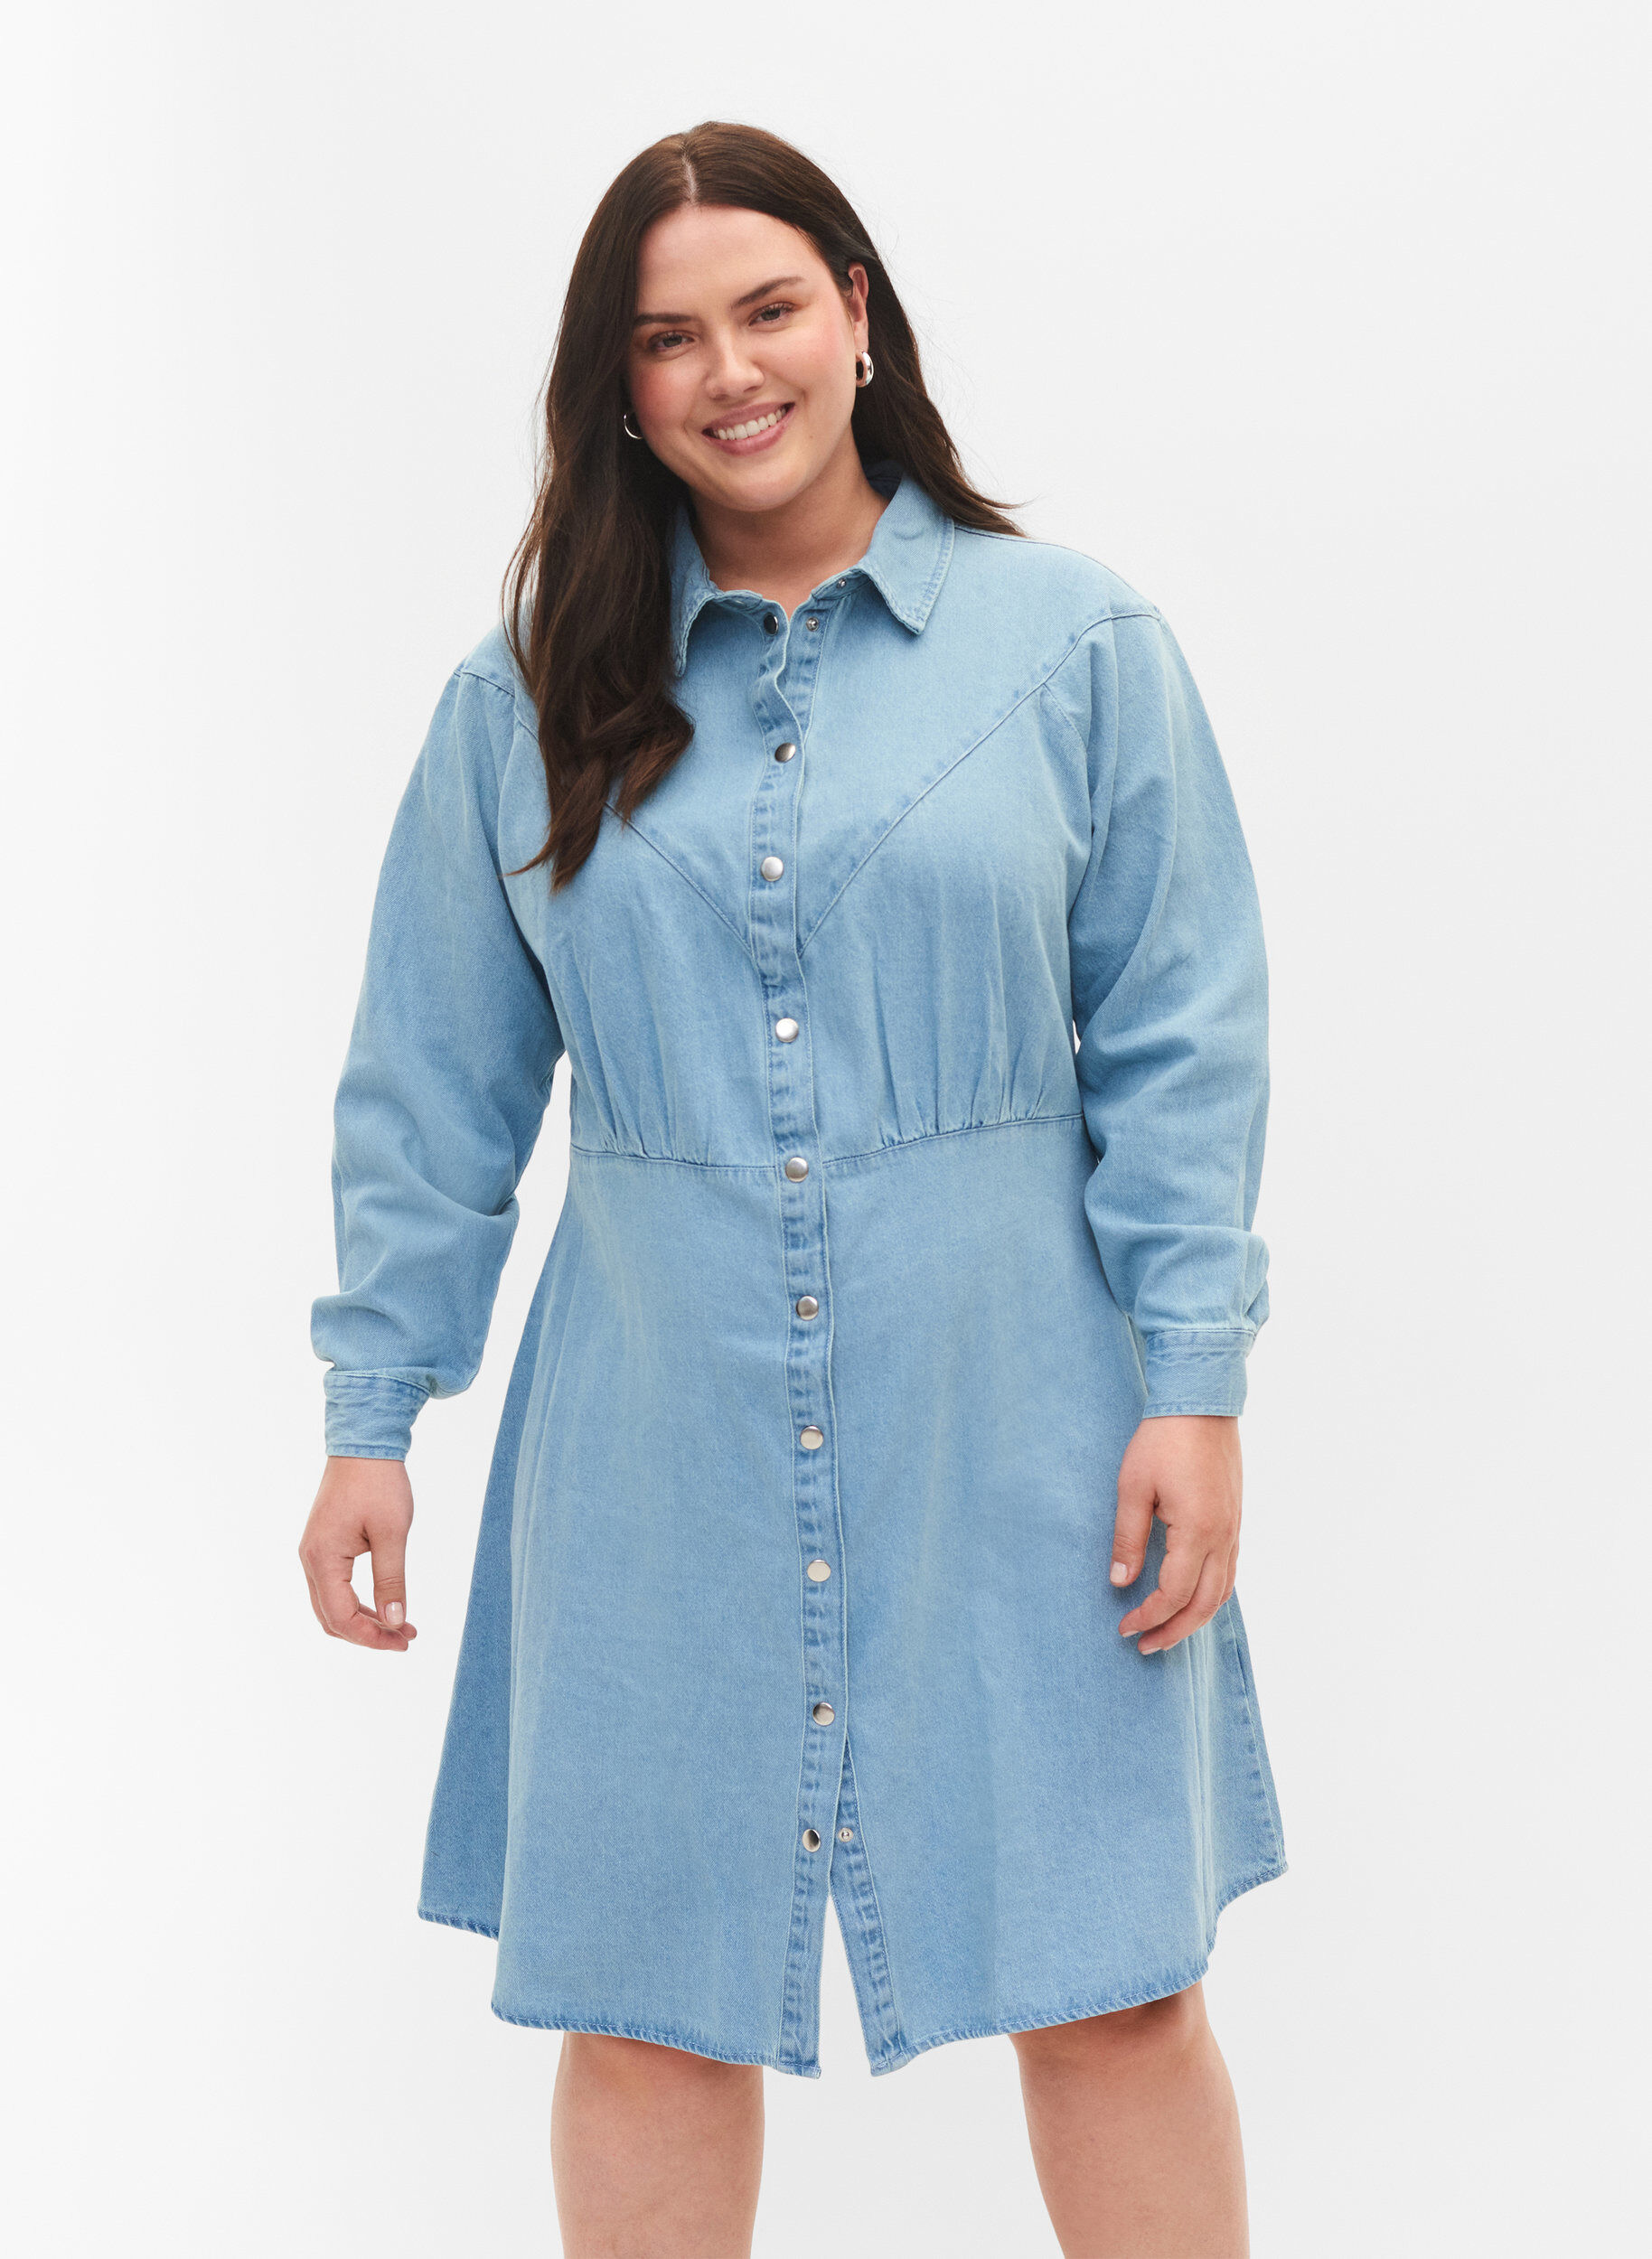 LISTHA Denim T-Shirt Dress Long Sleeve Maxi Dresses for Women Plus Size with Pockets 